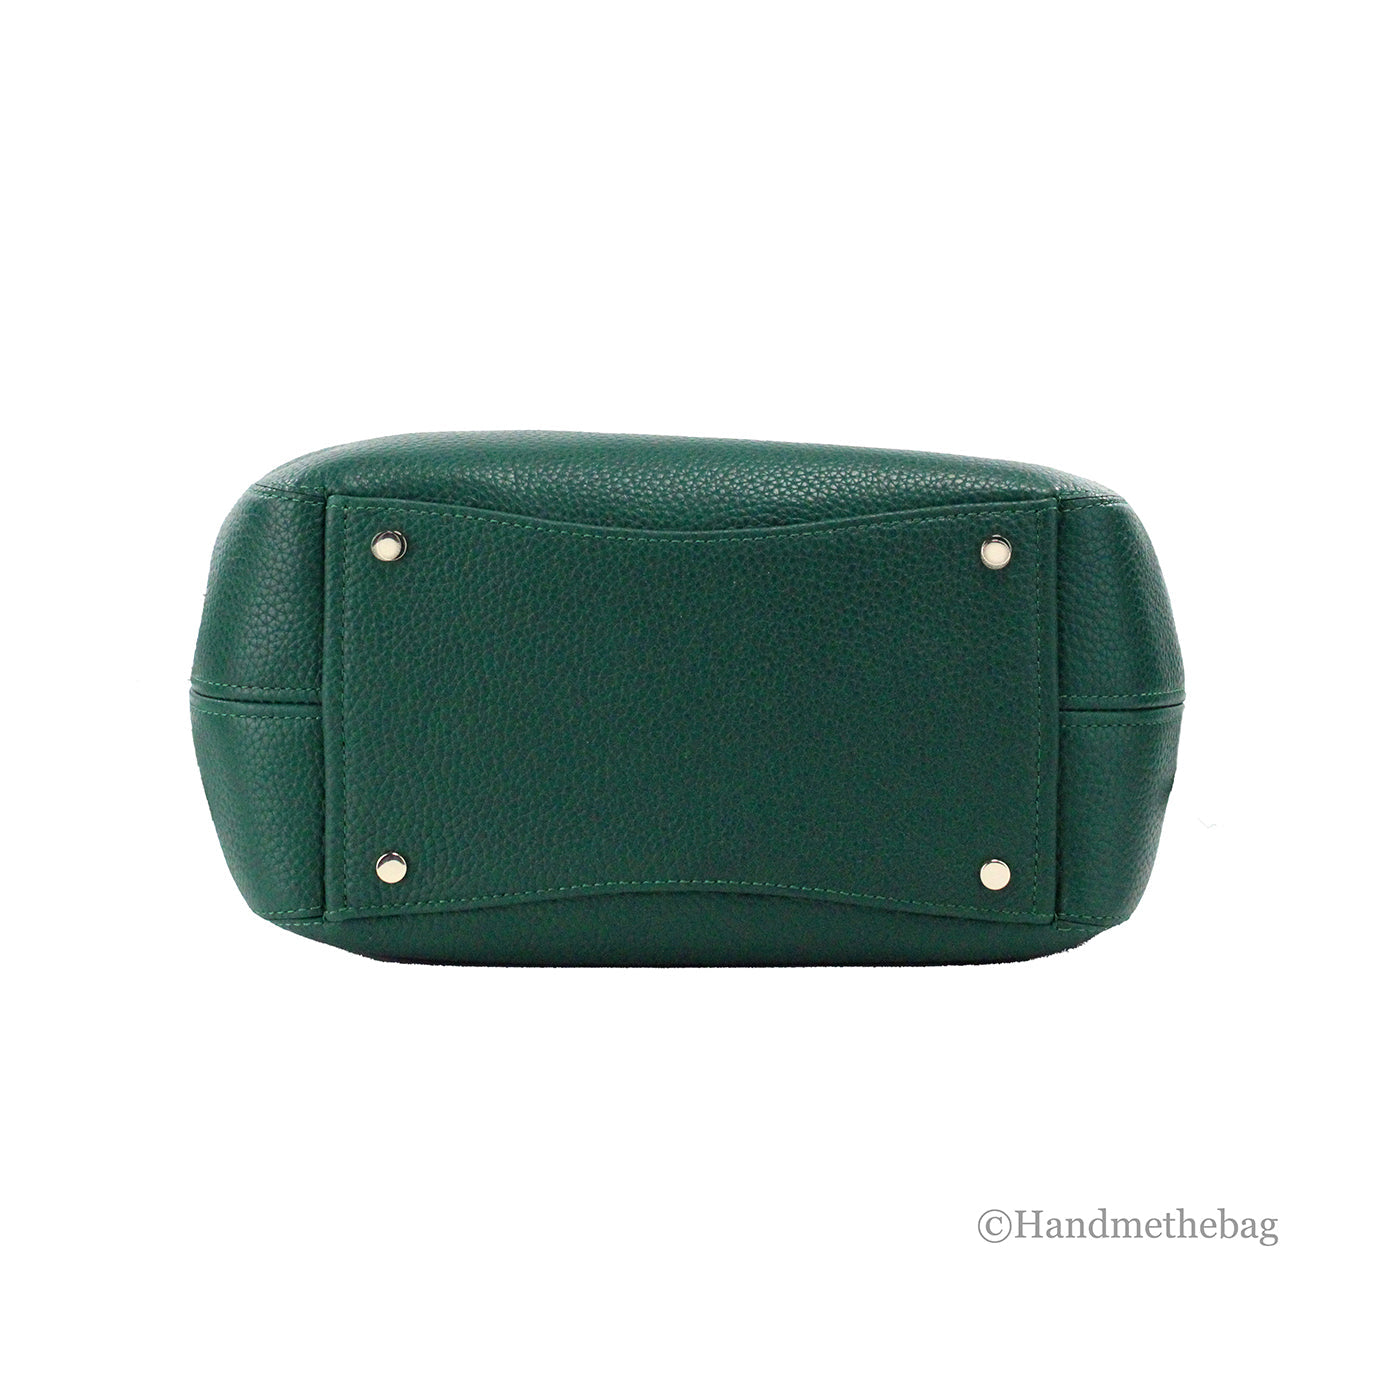 Kate Spade Green Quilted Handbag Small Tote Bag Purse | eBay